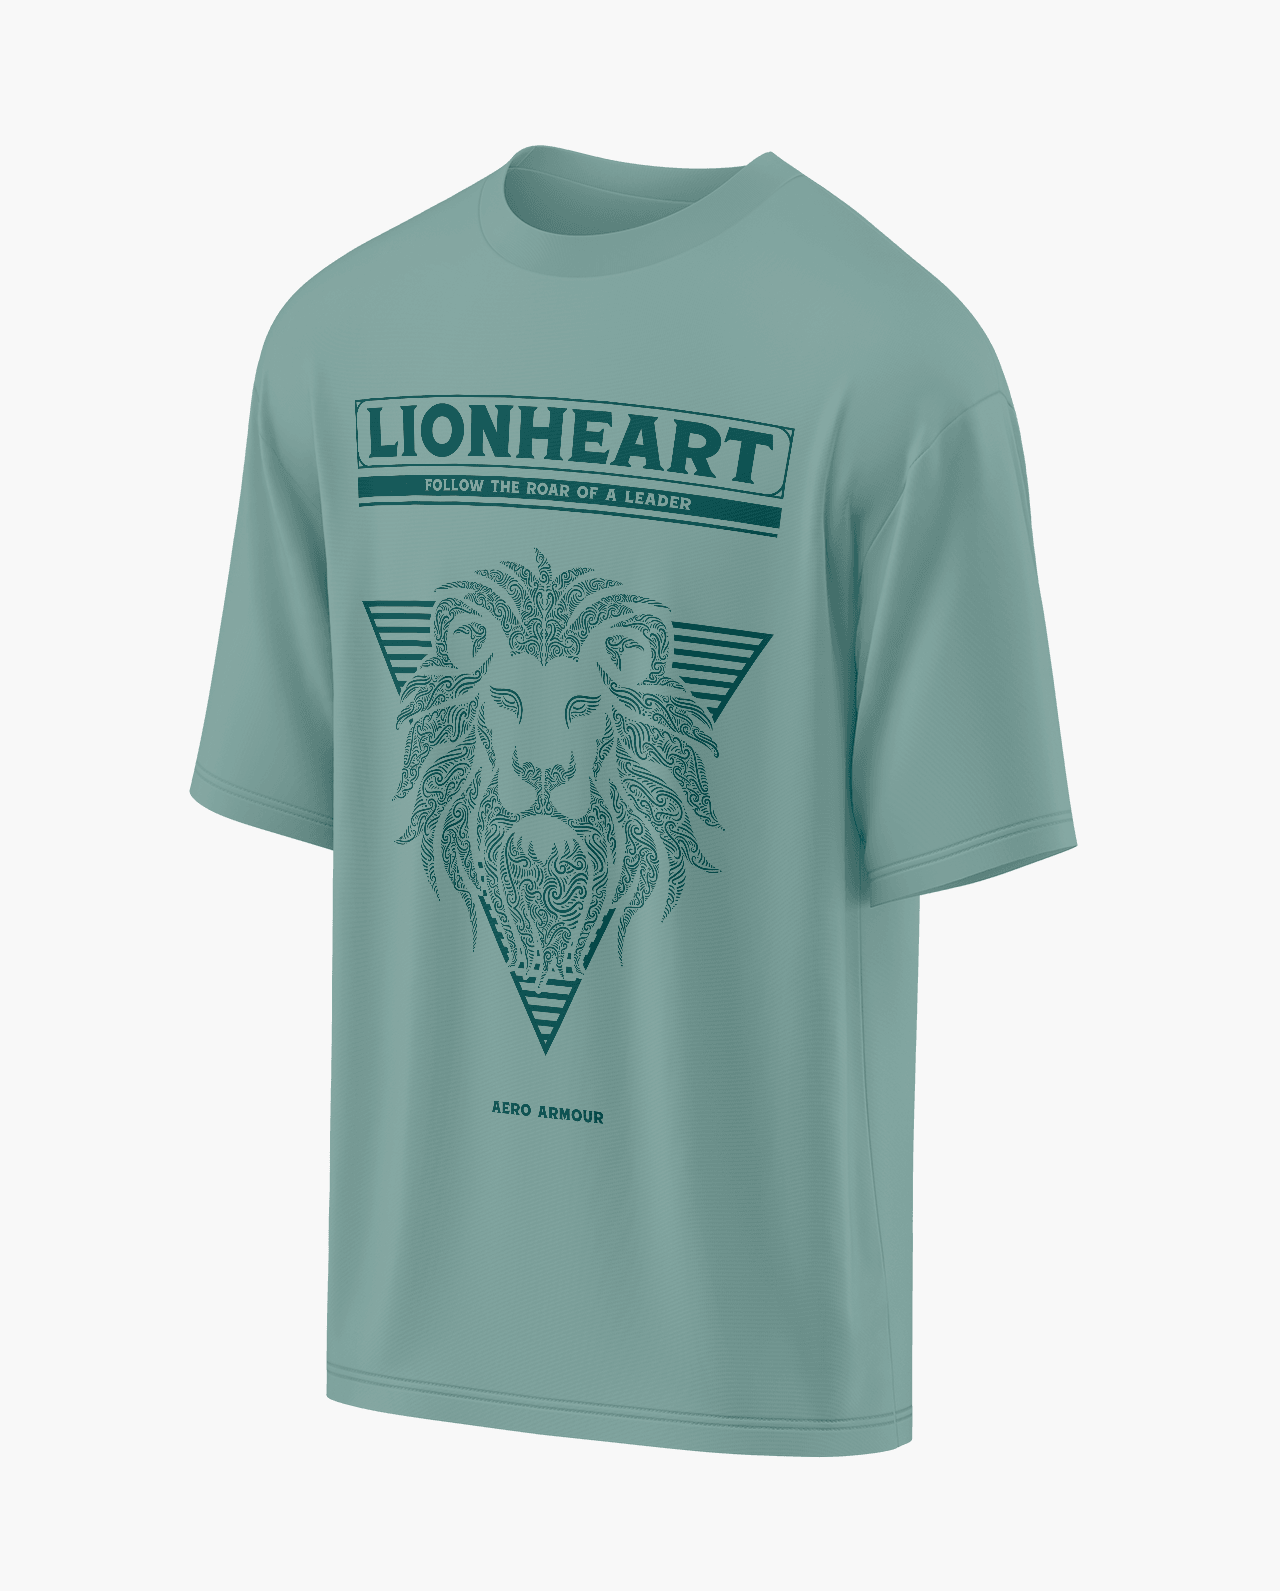 Lionheart Oversized T-Shirt - Aero Armour